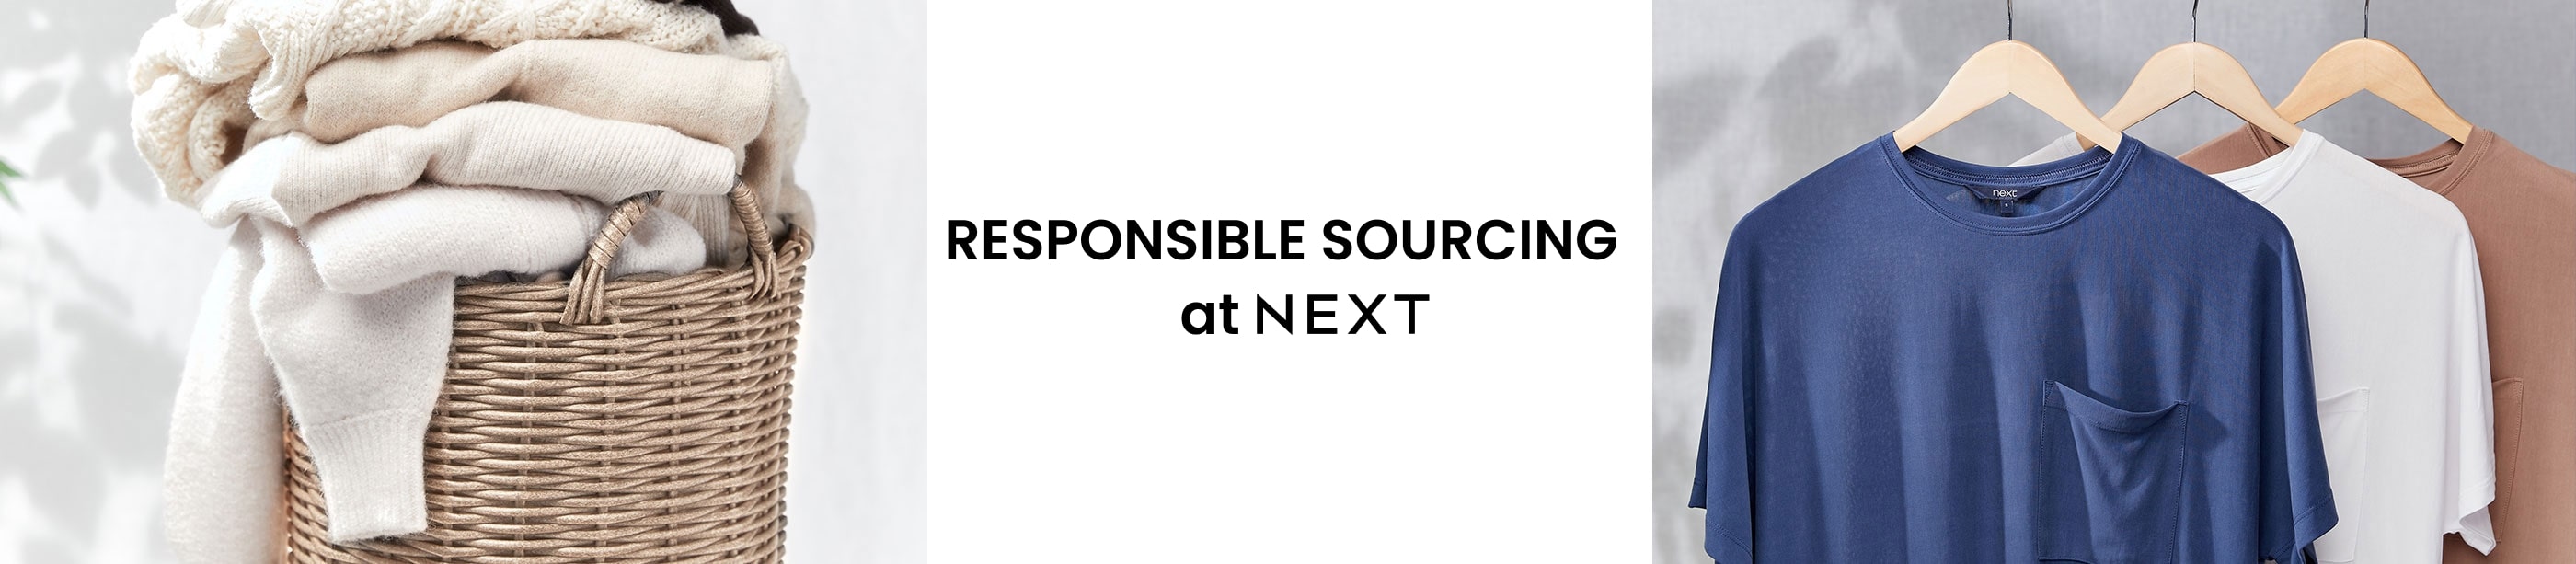 Responsible Sourcing at Next-2